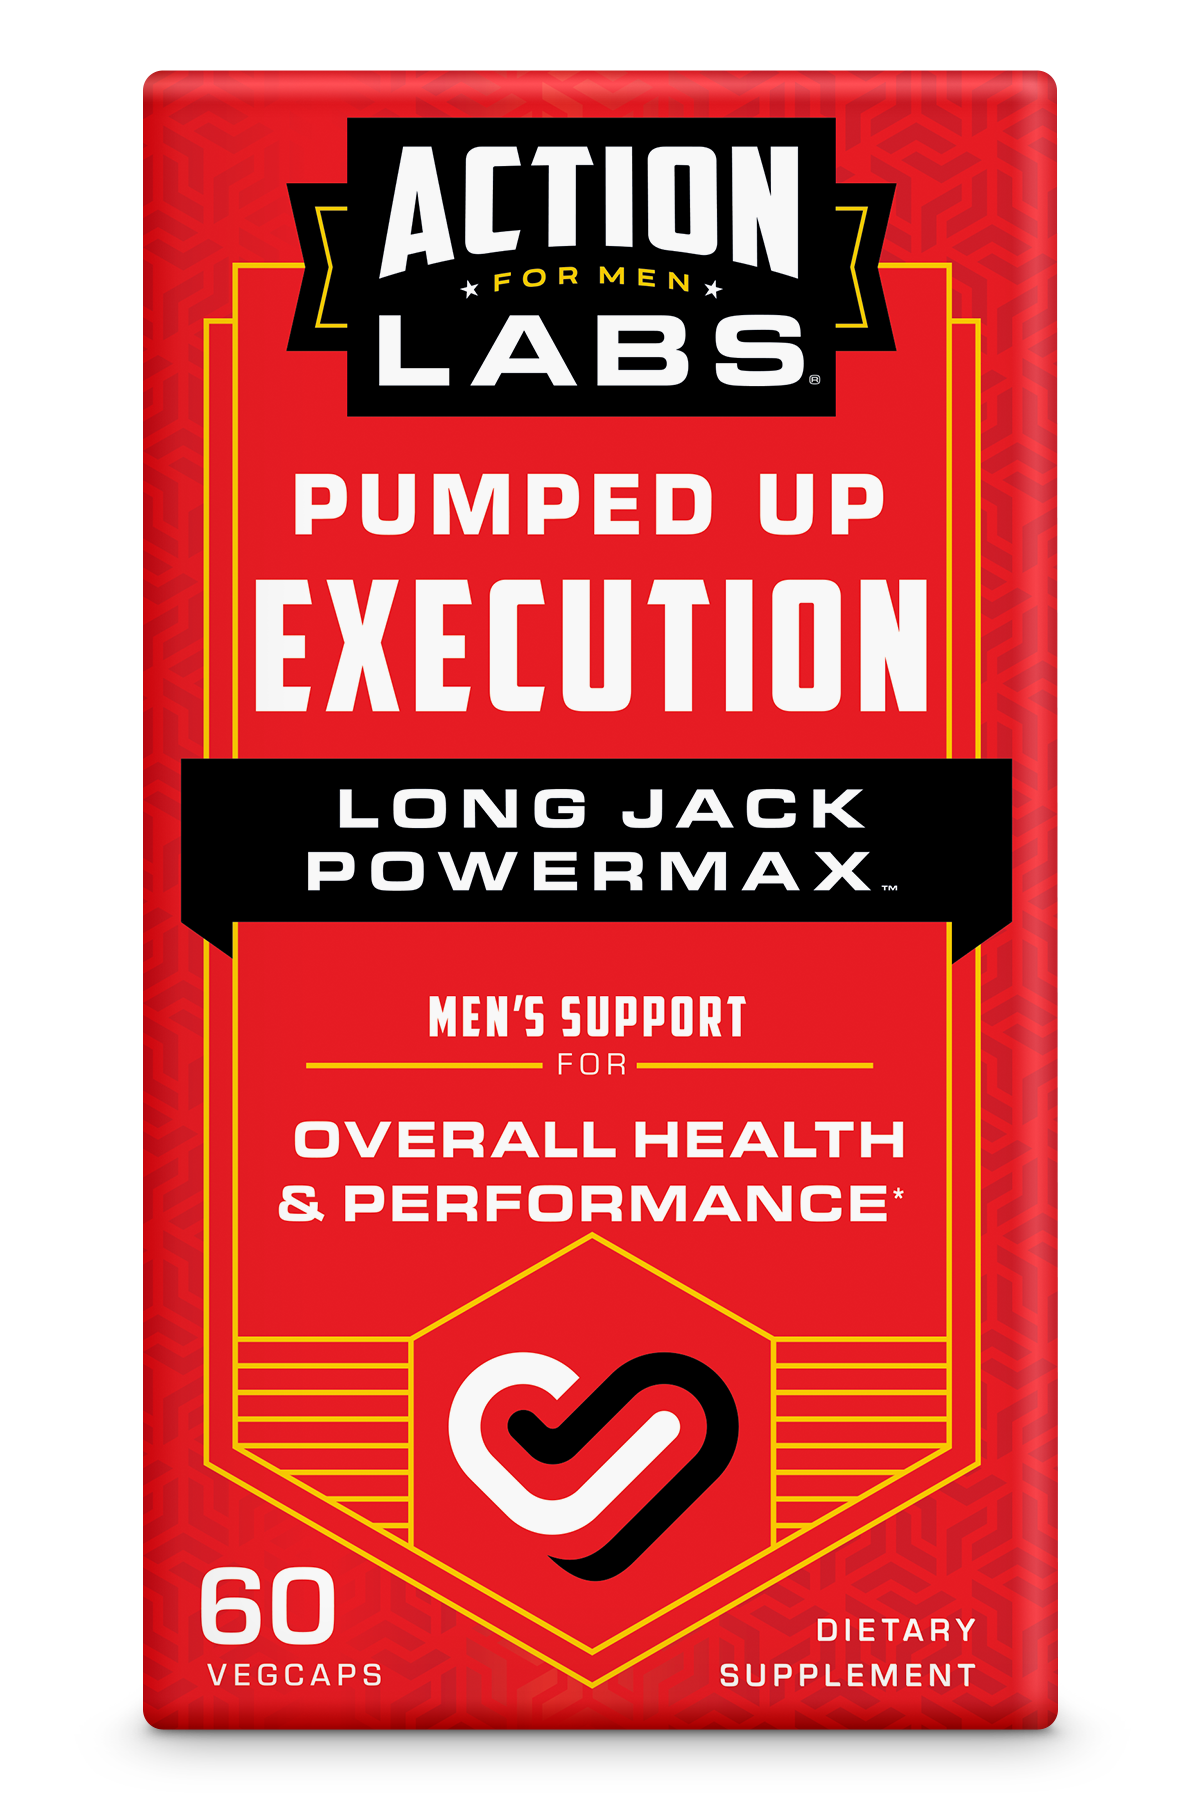 Long Jack PowerMax | Pumped Up Execution